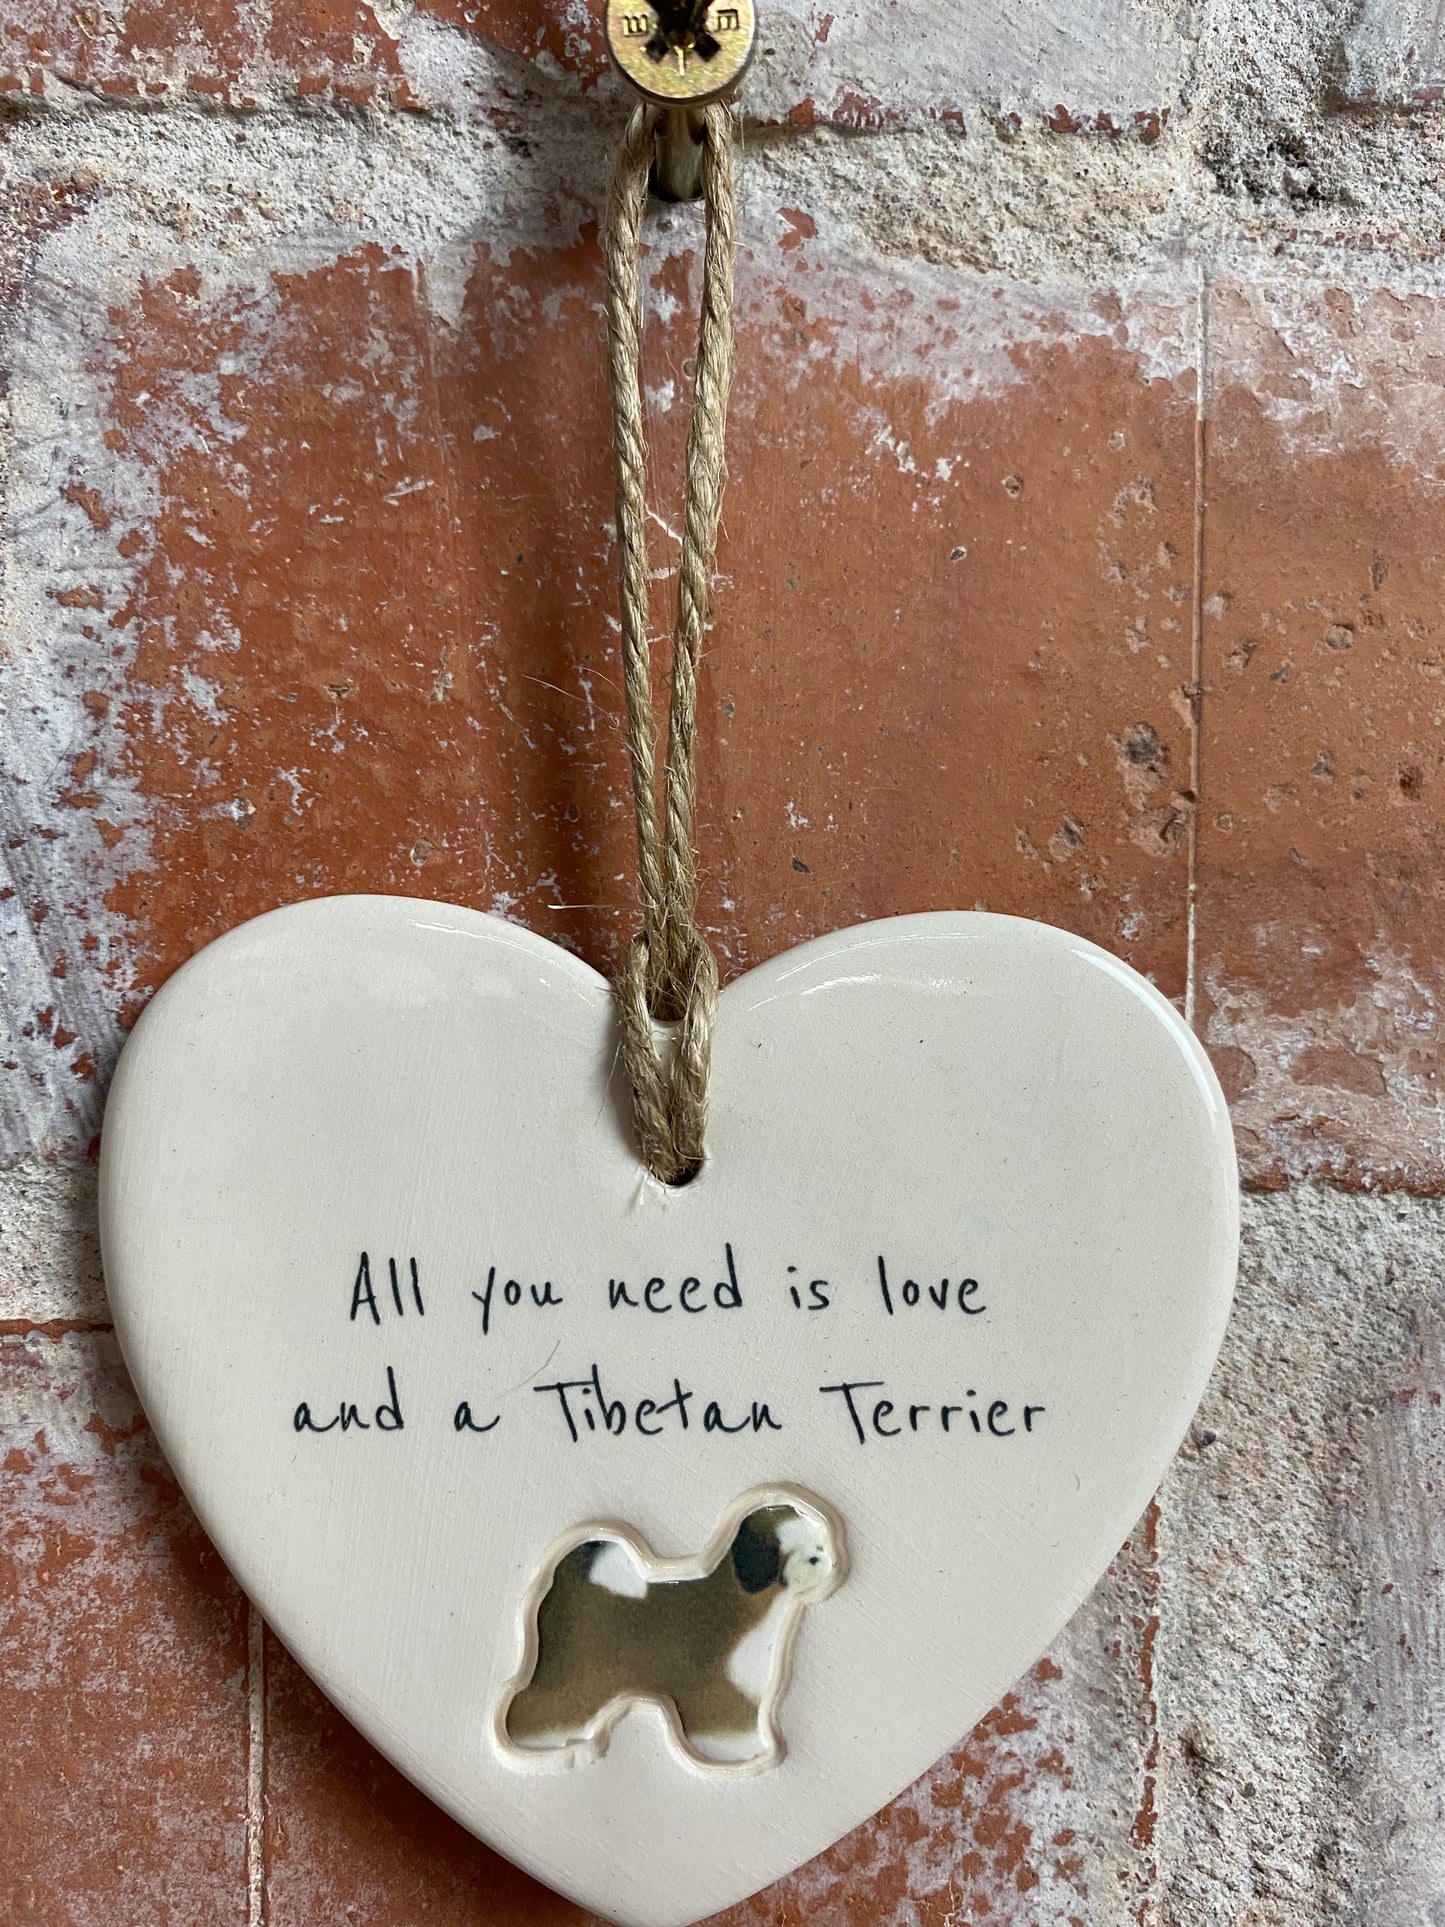 Tibetan Terrier ceramic heart